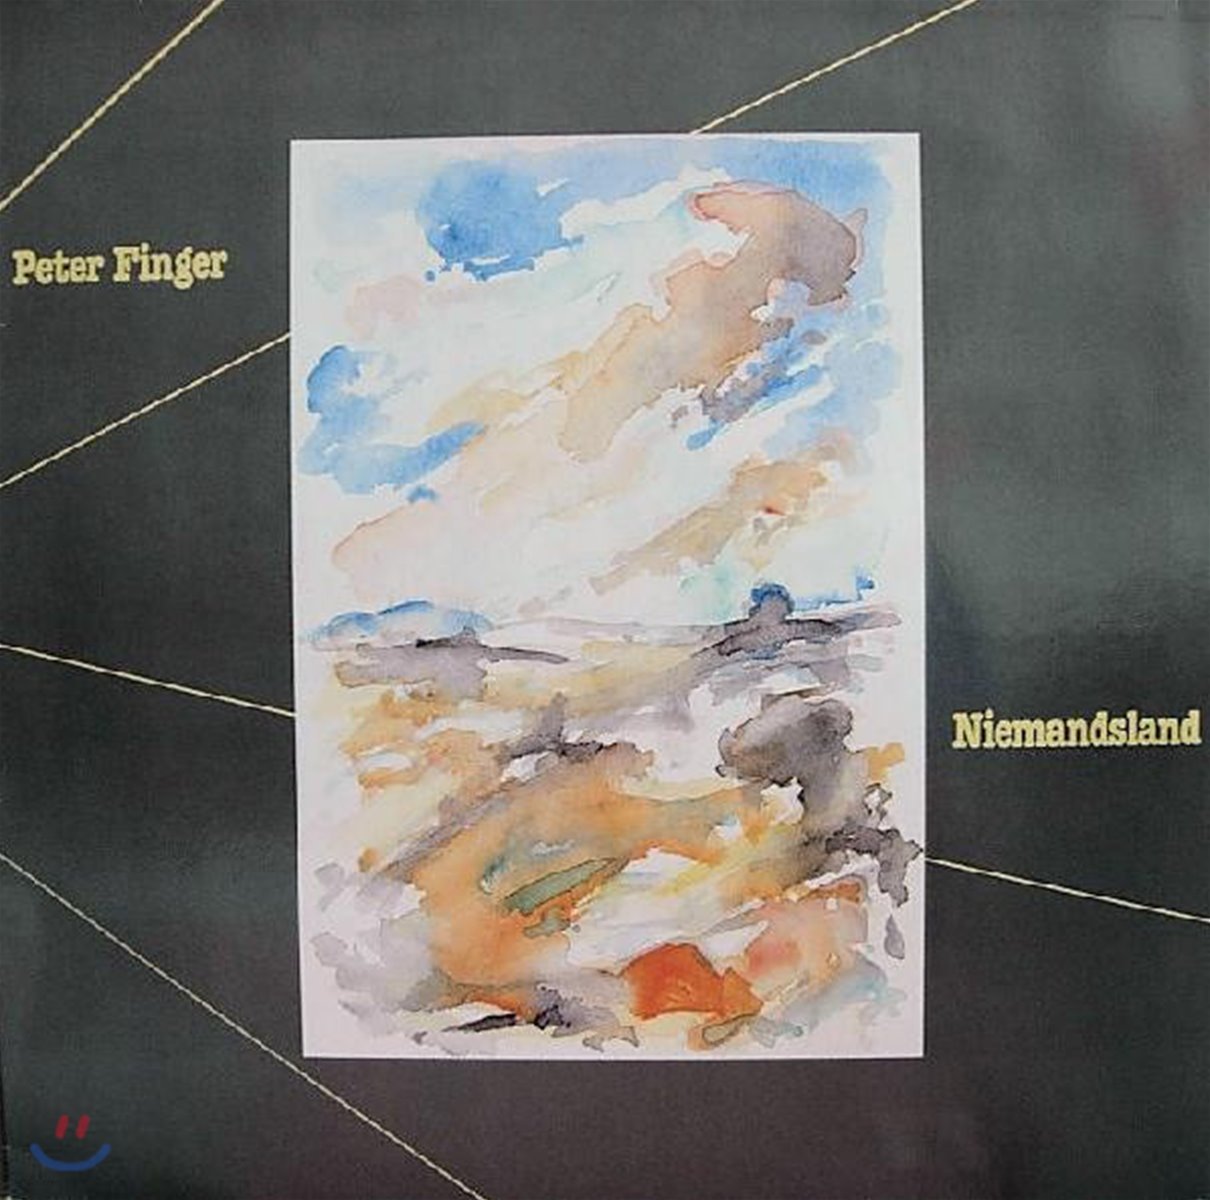 Peter Finger (피터 핑거) - Niemandsland